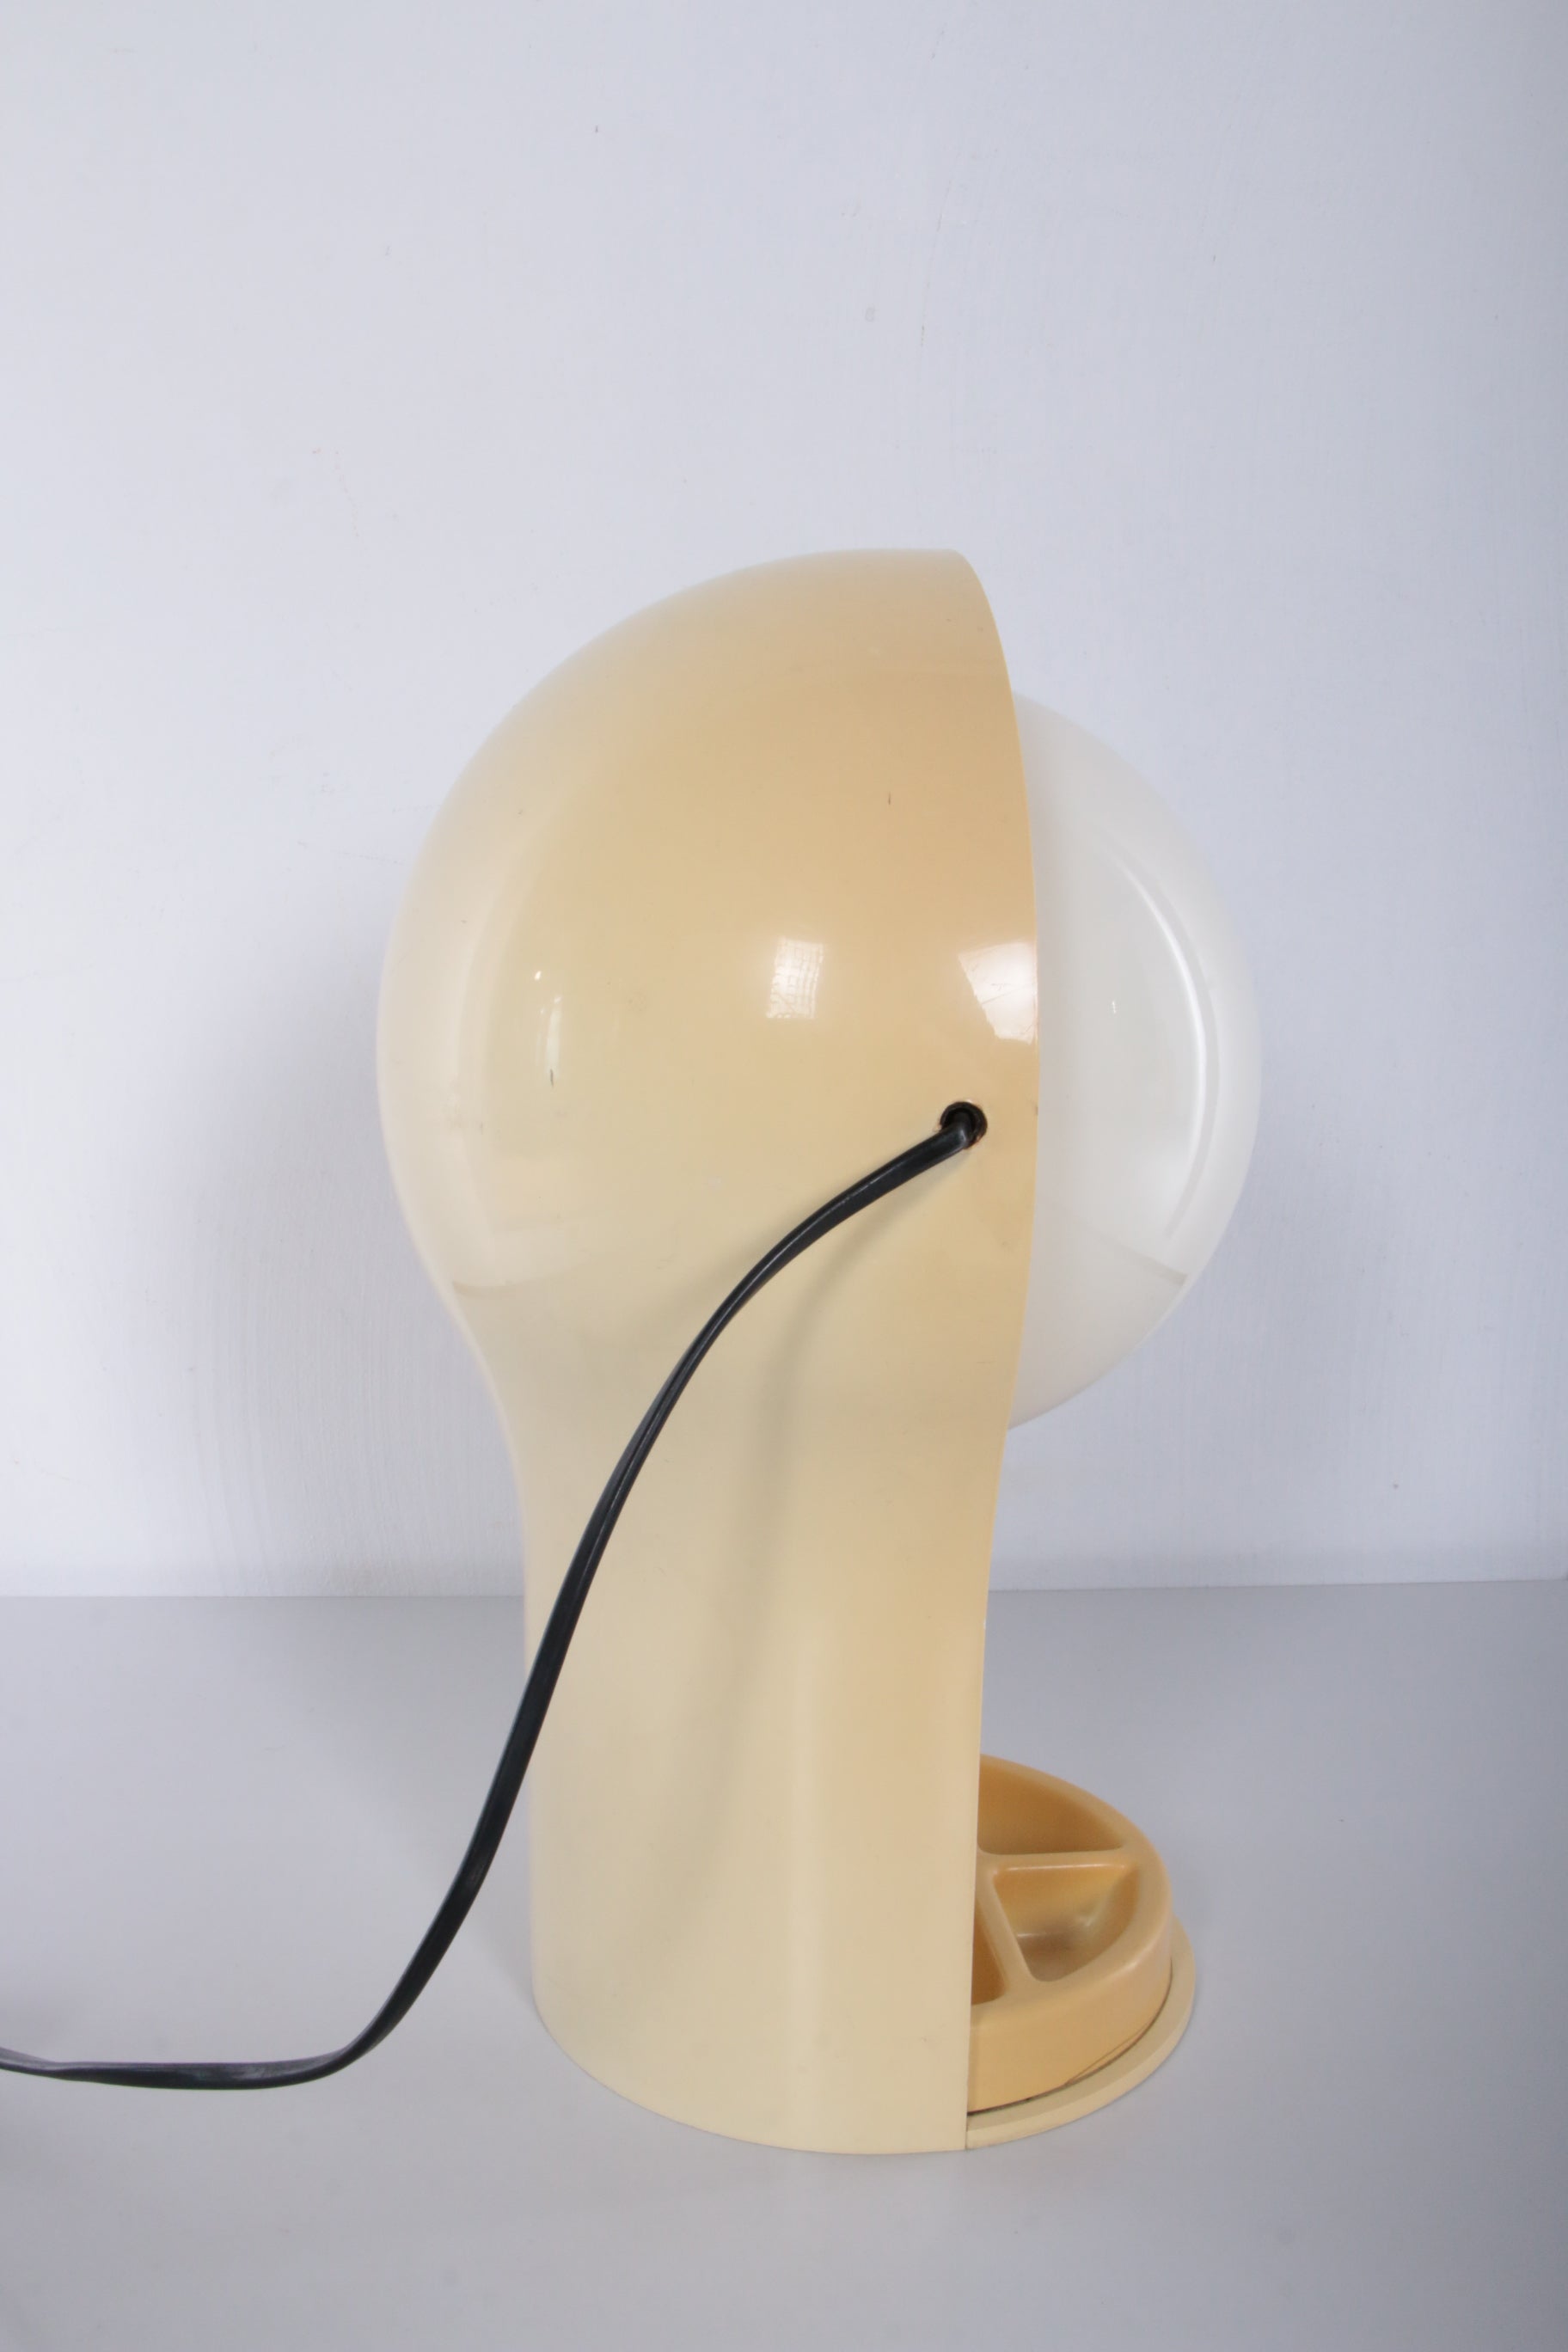 Vico Magistretti Desk lamp Model Telegono gemaakt door Artemide,1960s Italie